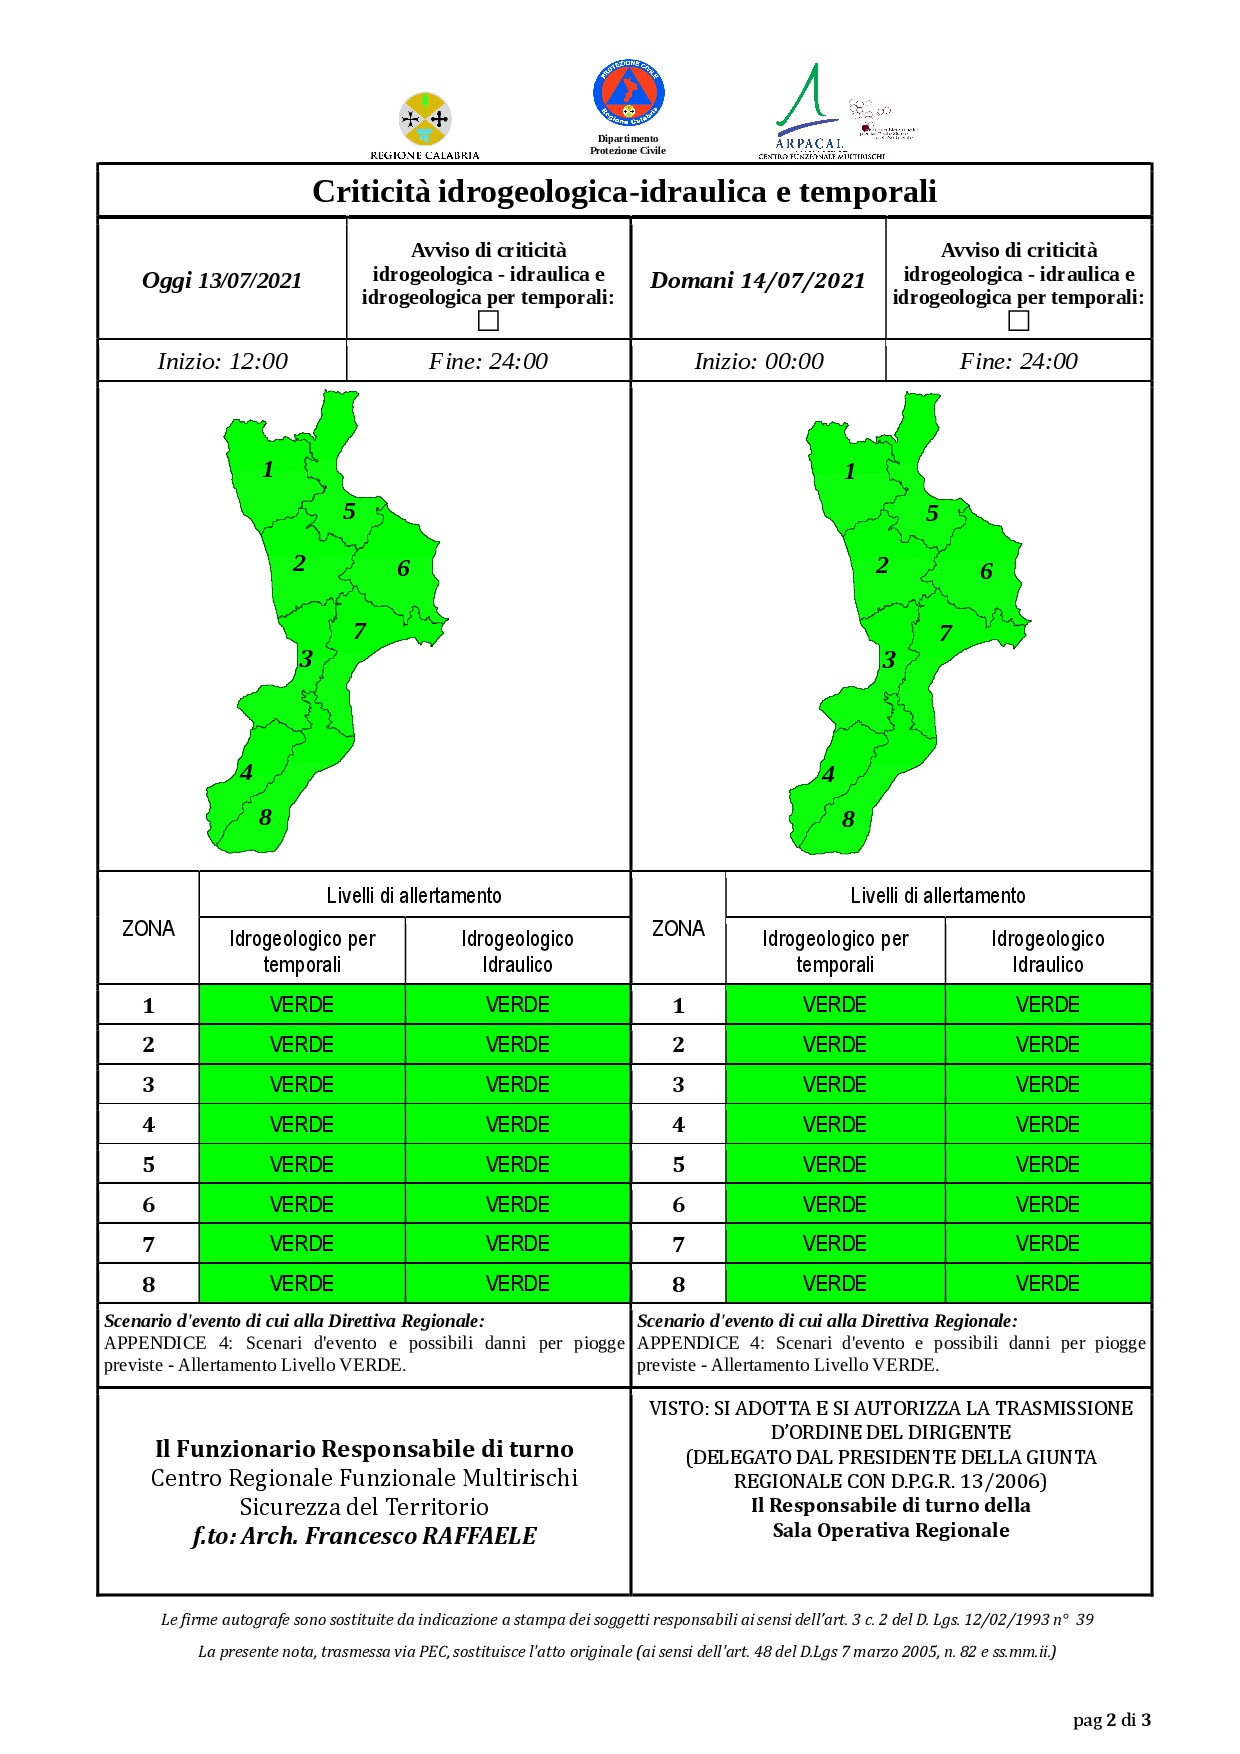 Criticità idrogeologica-idraulica e temporali in Calabria 13-07-2021